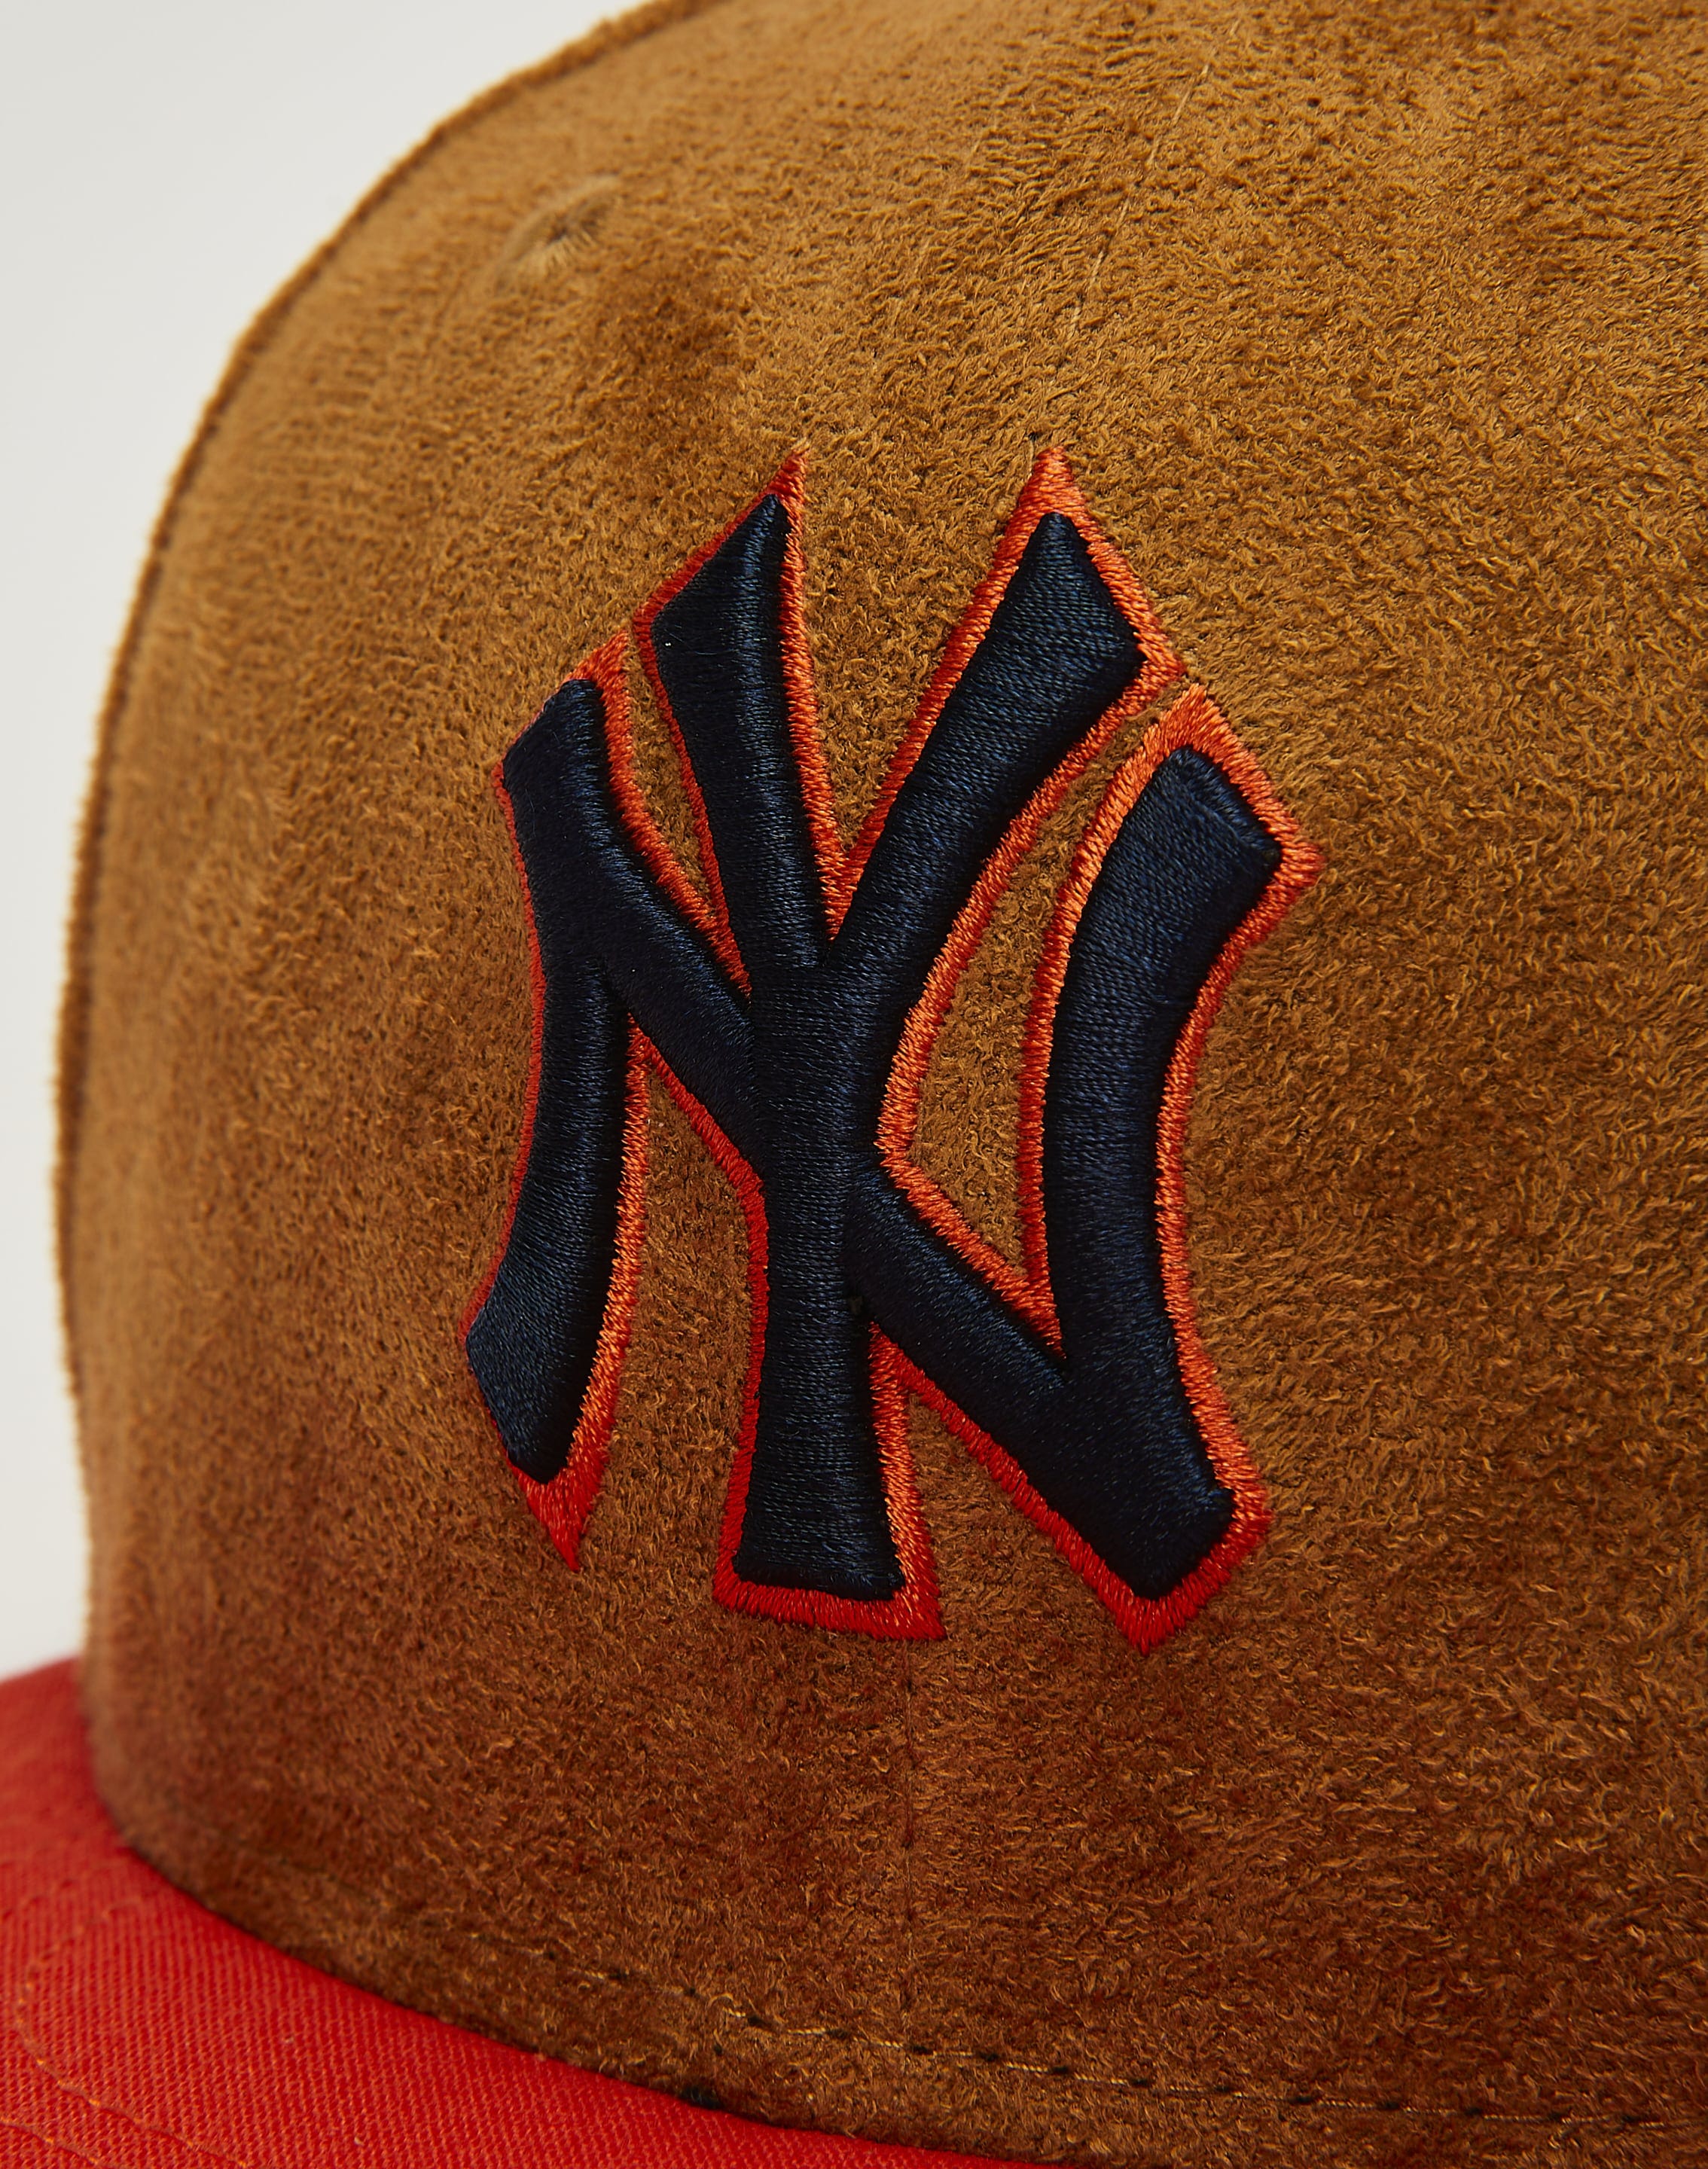 new era new york yankees cap